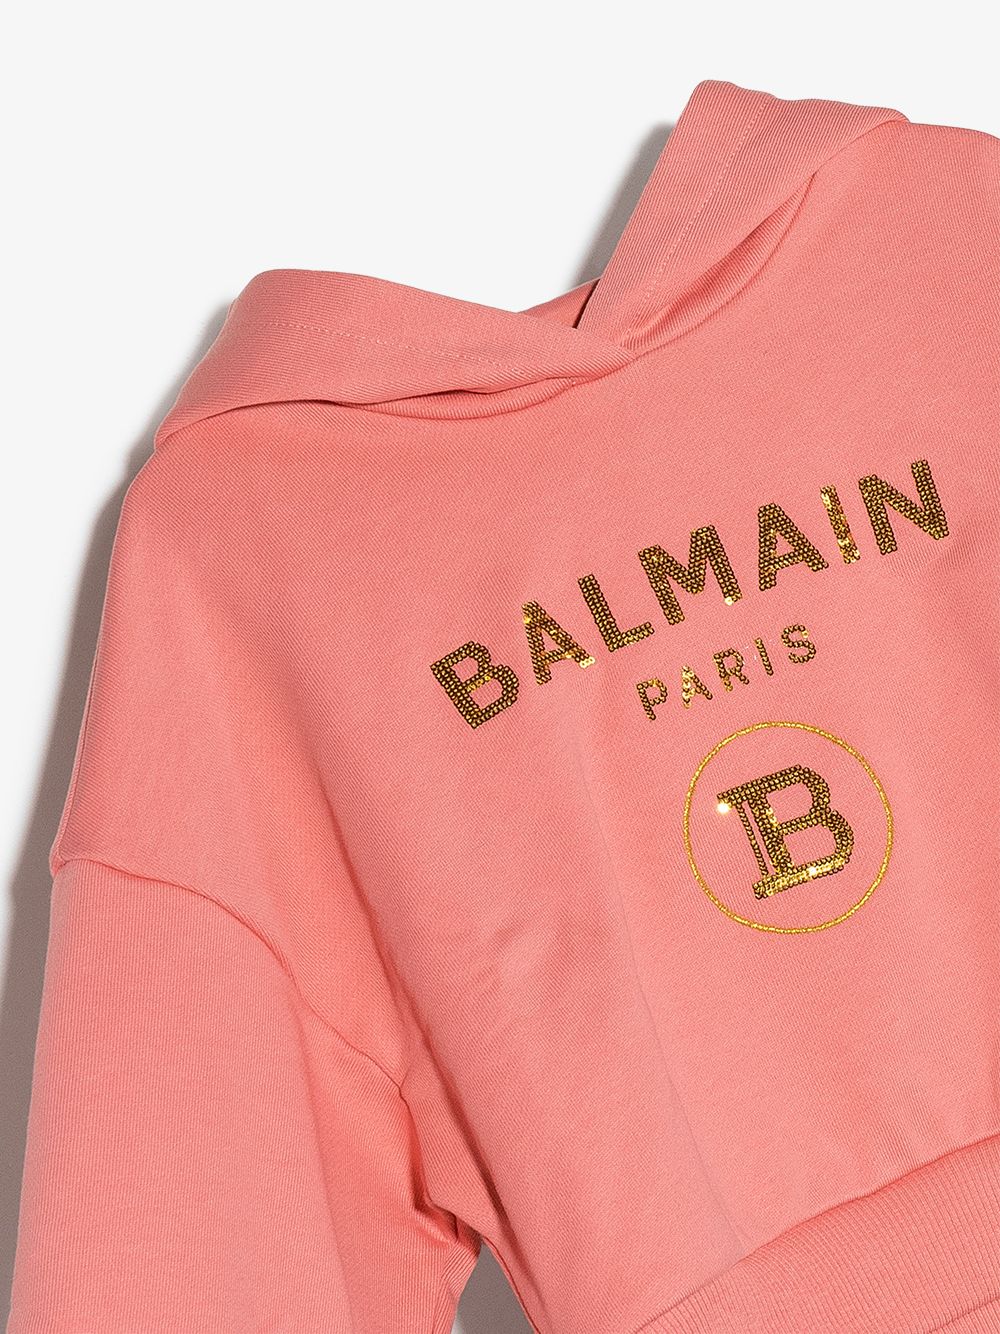 BALMAIN KIDS Sequin Logo Sweatshirt Pink - MAISONDEFASHION.COM